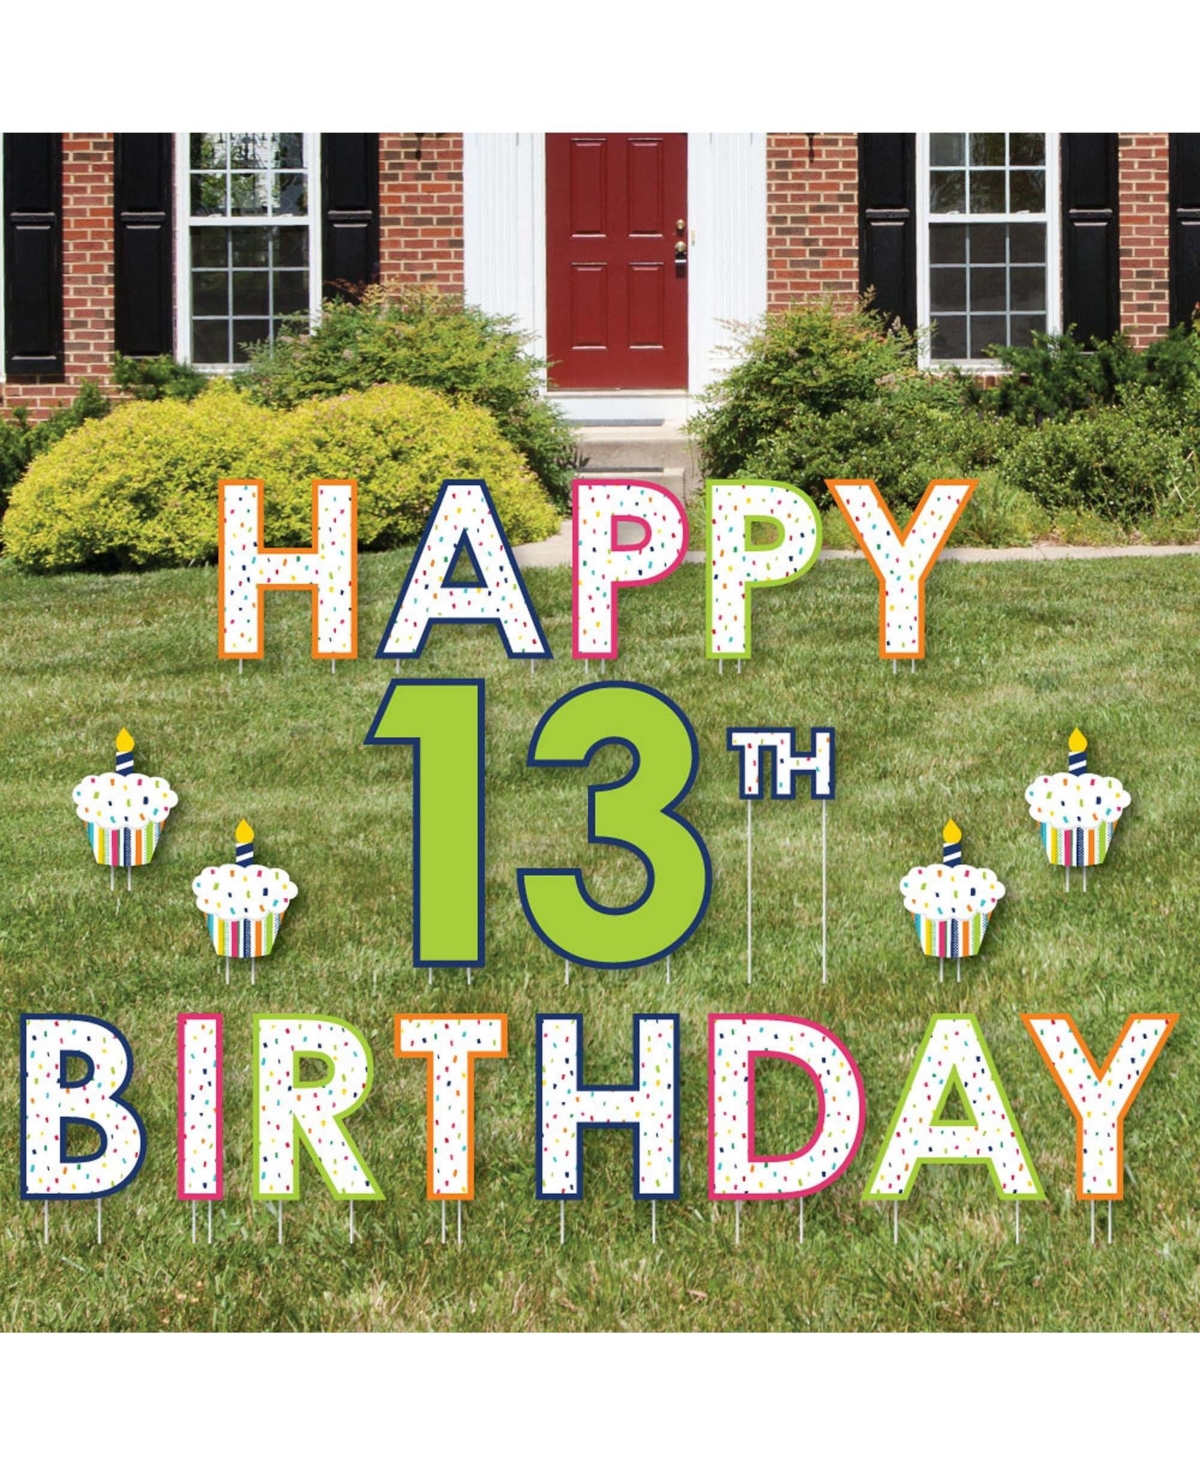 13th Birthday - Cheerful Happy Birthday Decor Yard Signs - Happy 13th Birthday